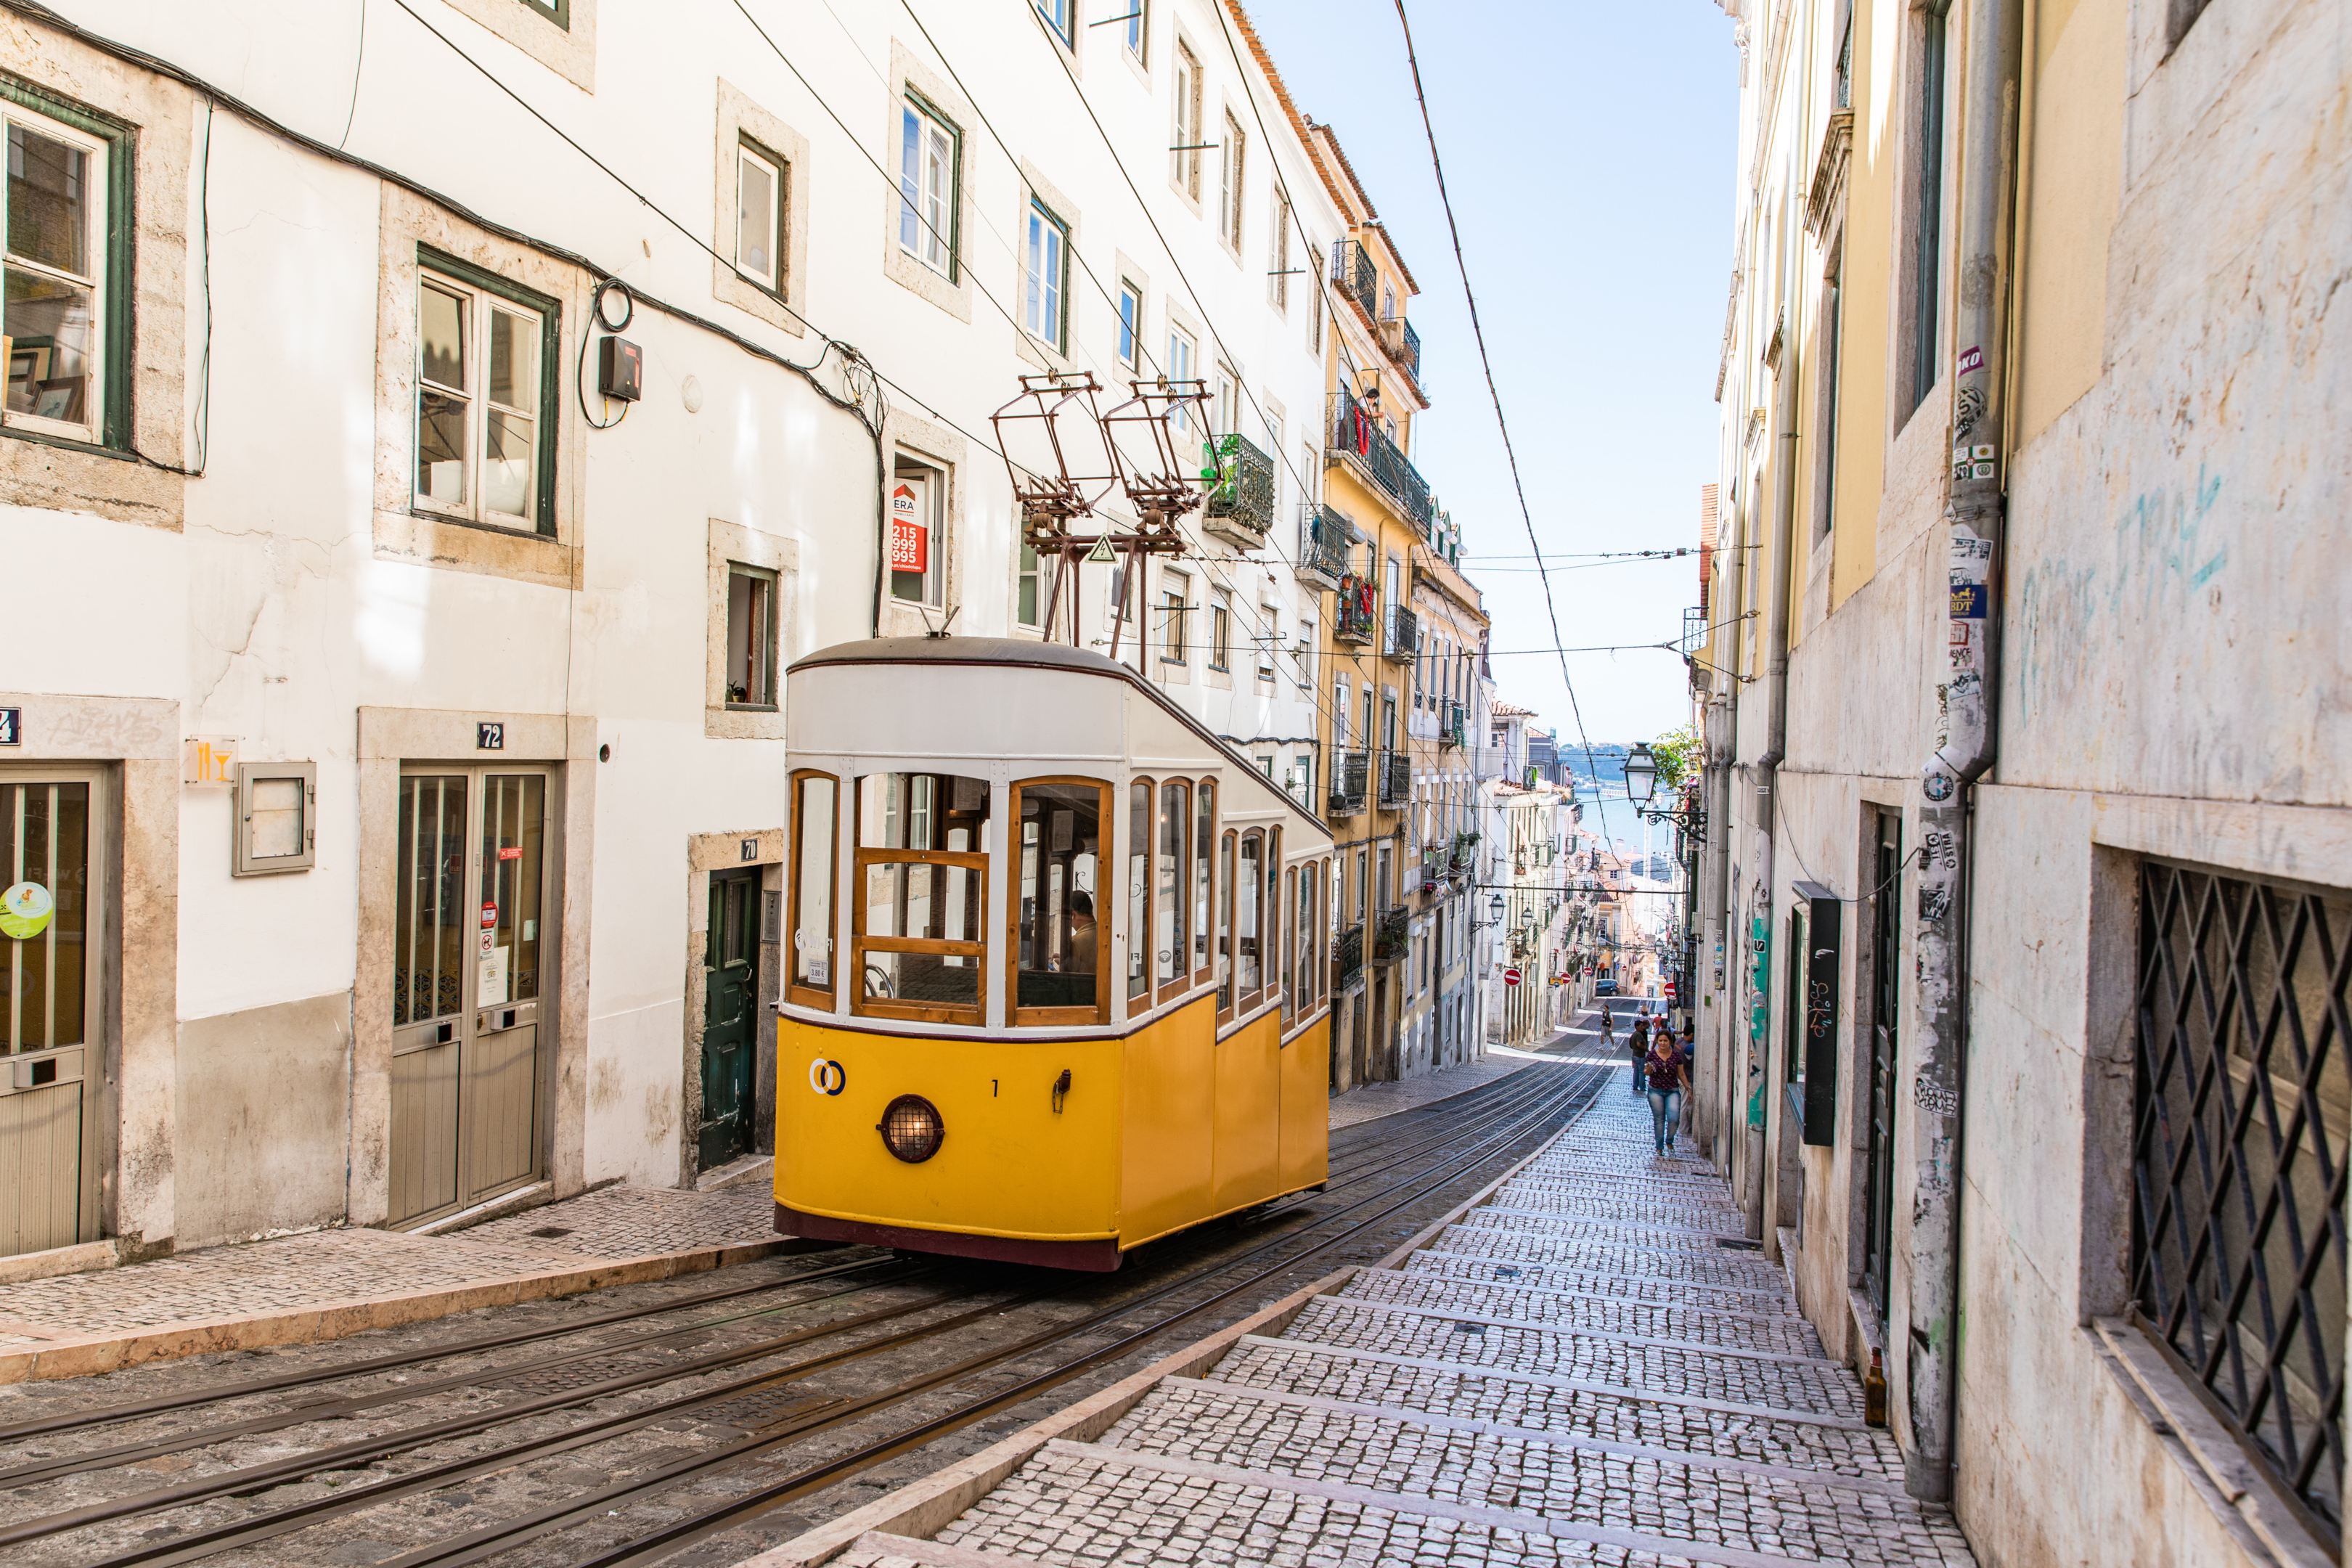 Tram 28 - getting around in Lisbon, Portugal